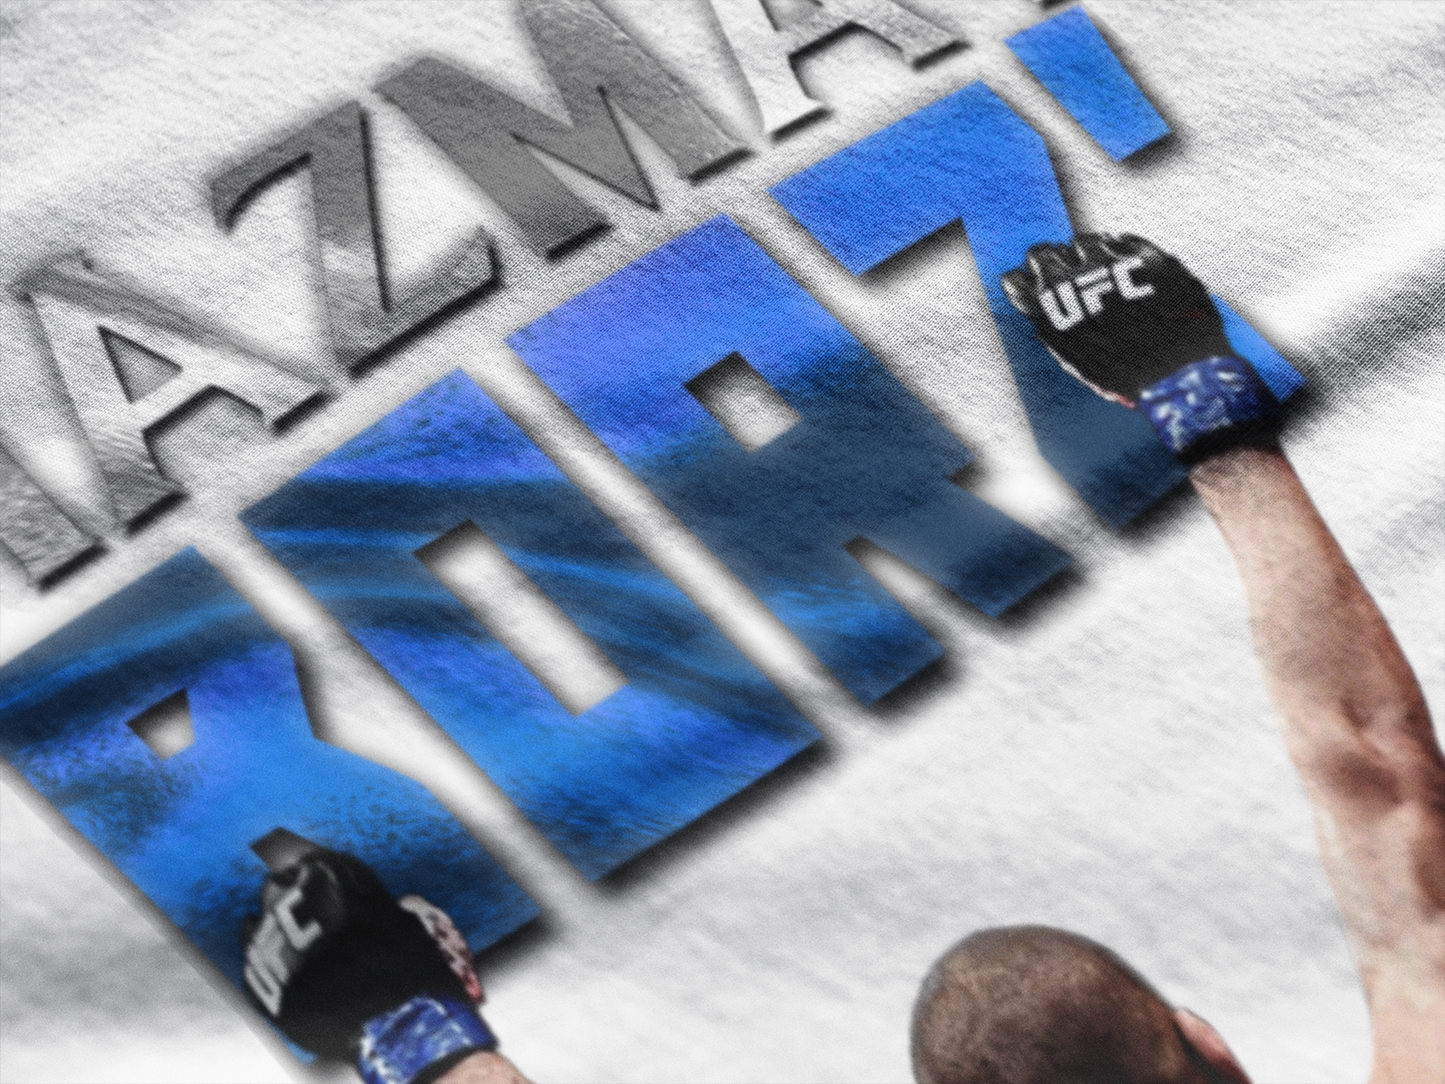 Khazmat "Borz" Chimaev UFC Graphic Tee